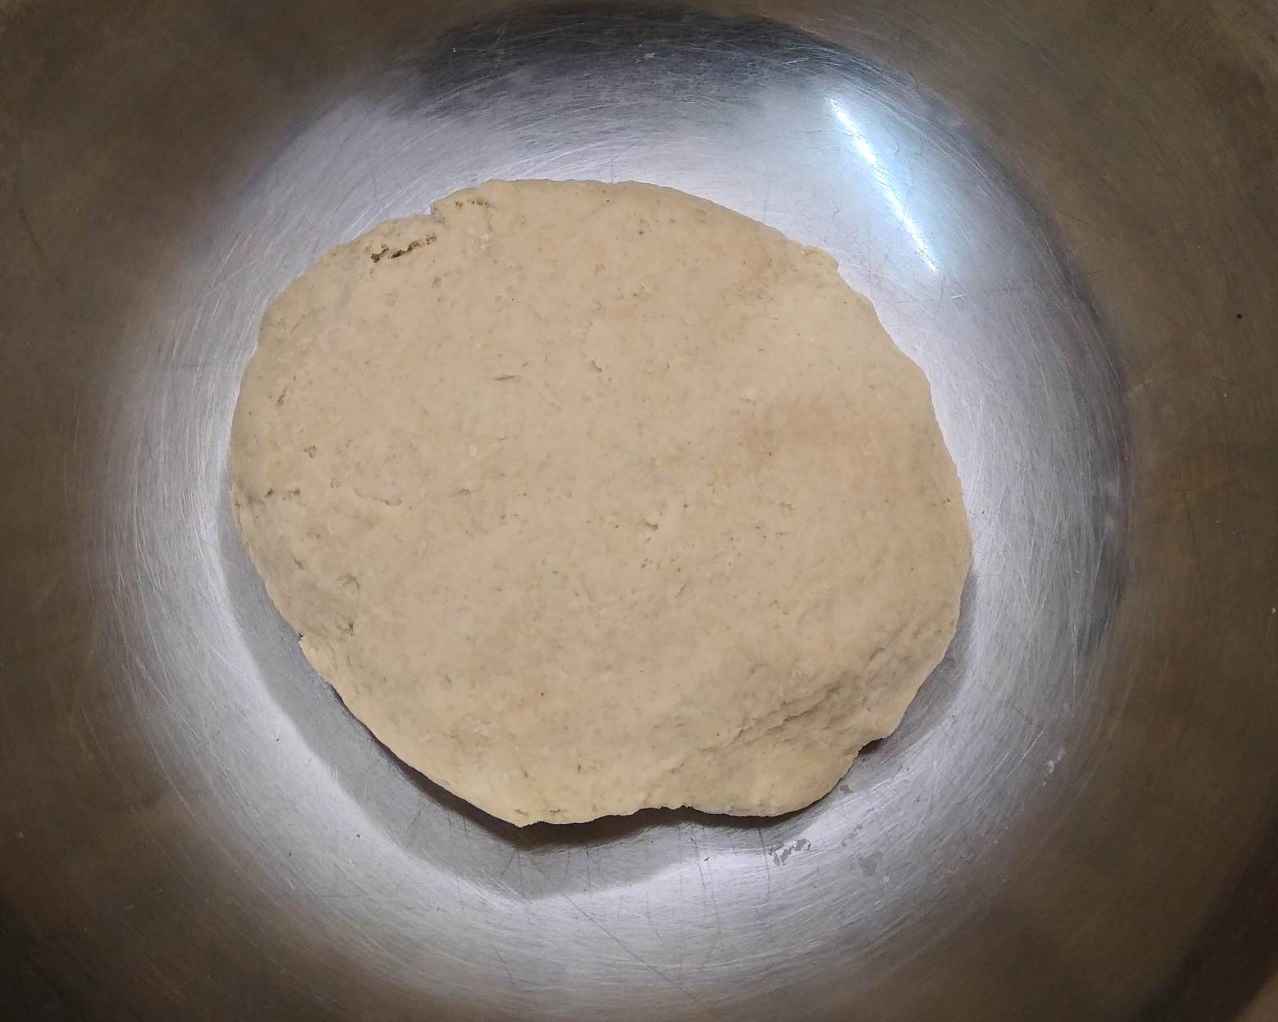 How to Make the Dough